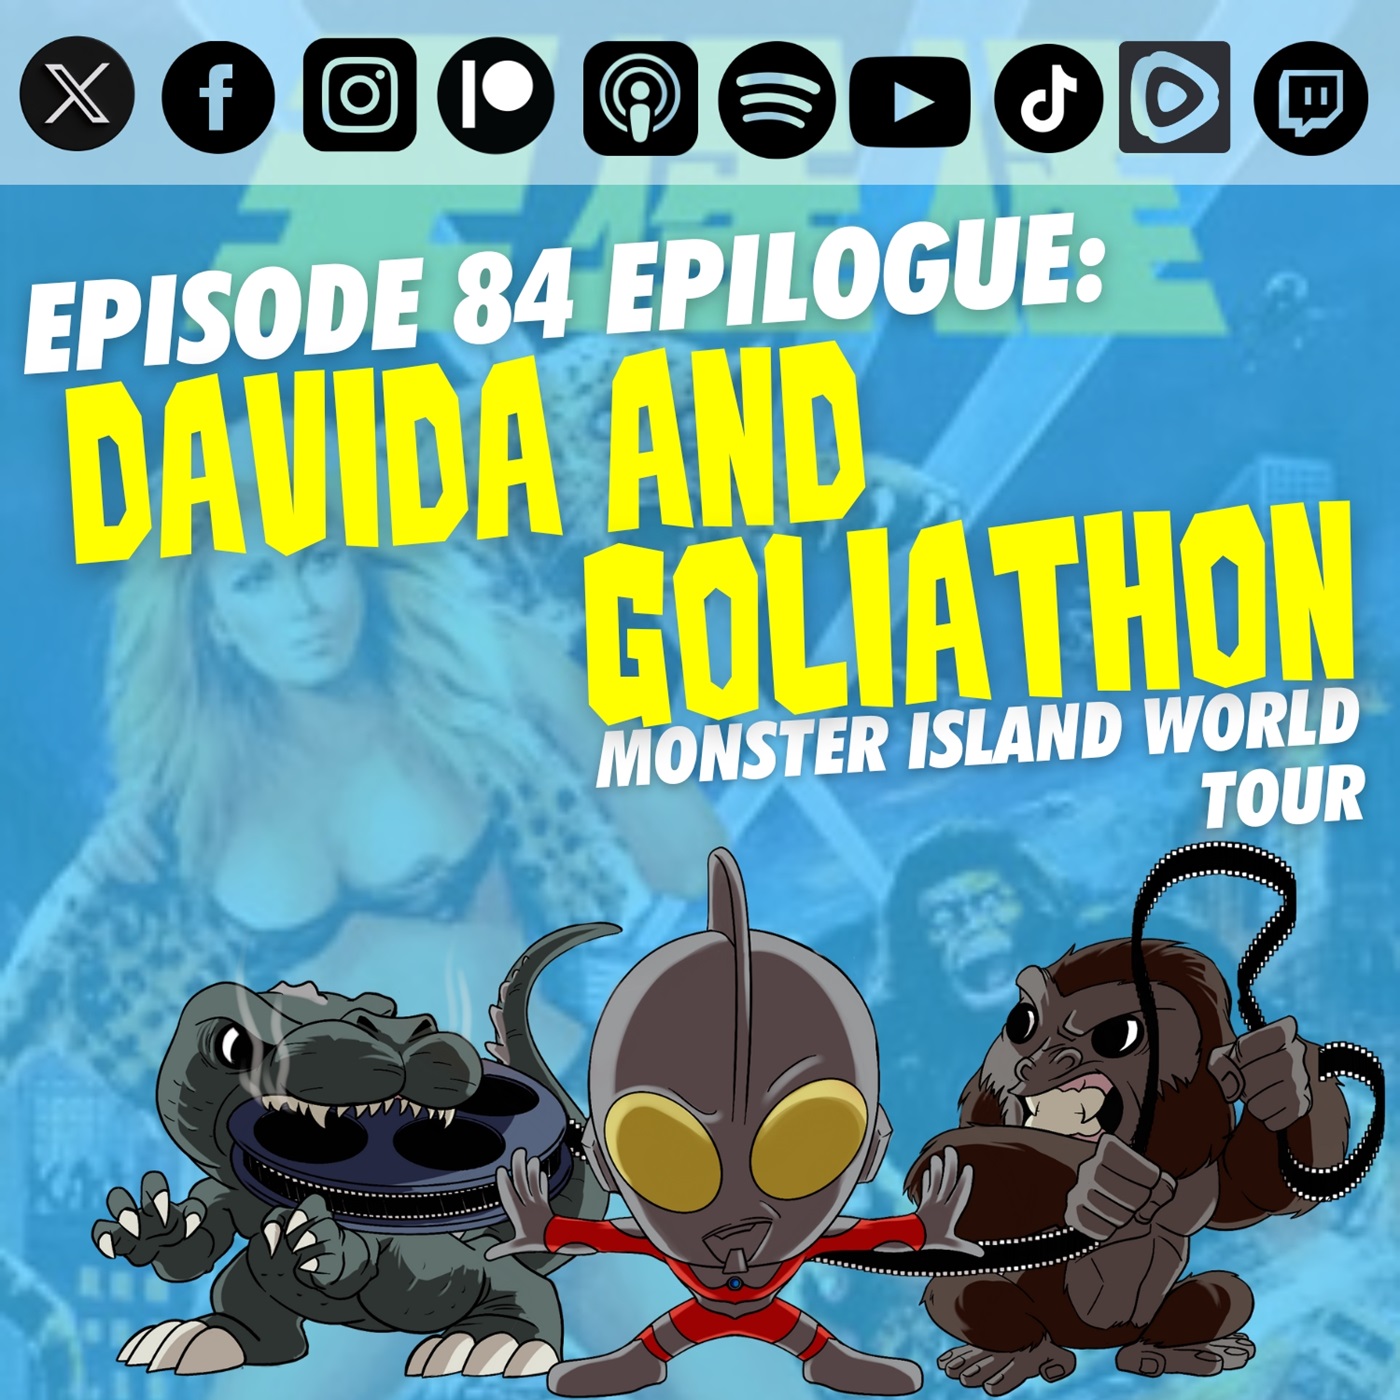 Episode 84 Epilogue: “Davida and Goliathon”